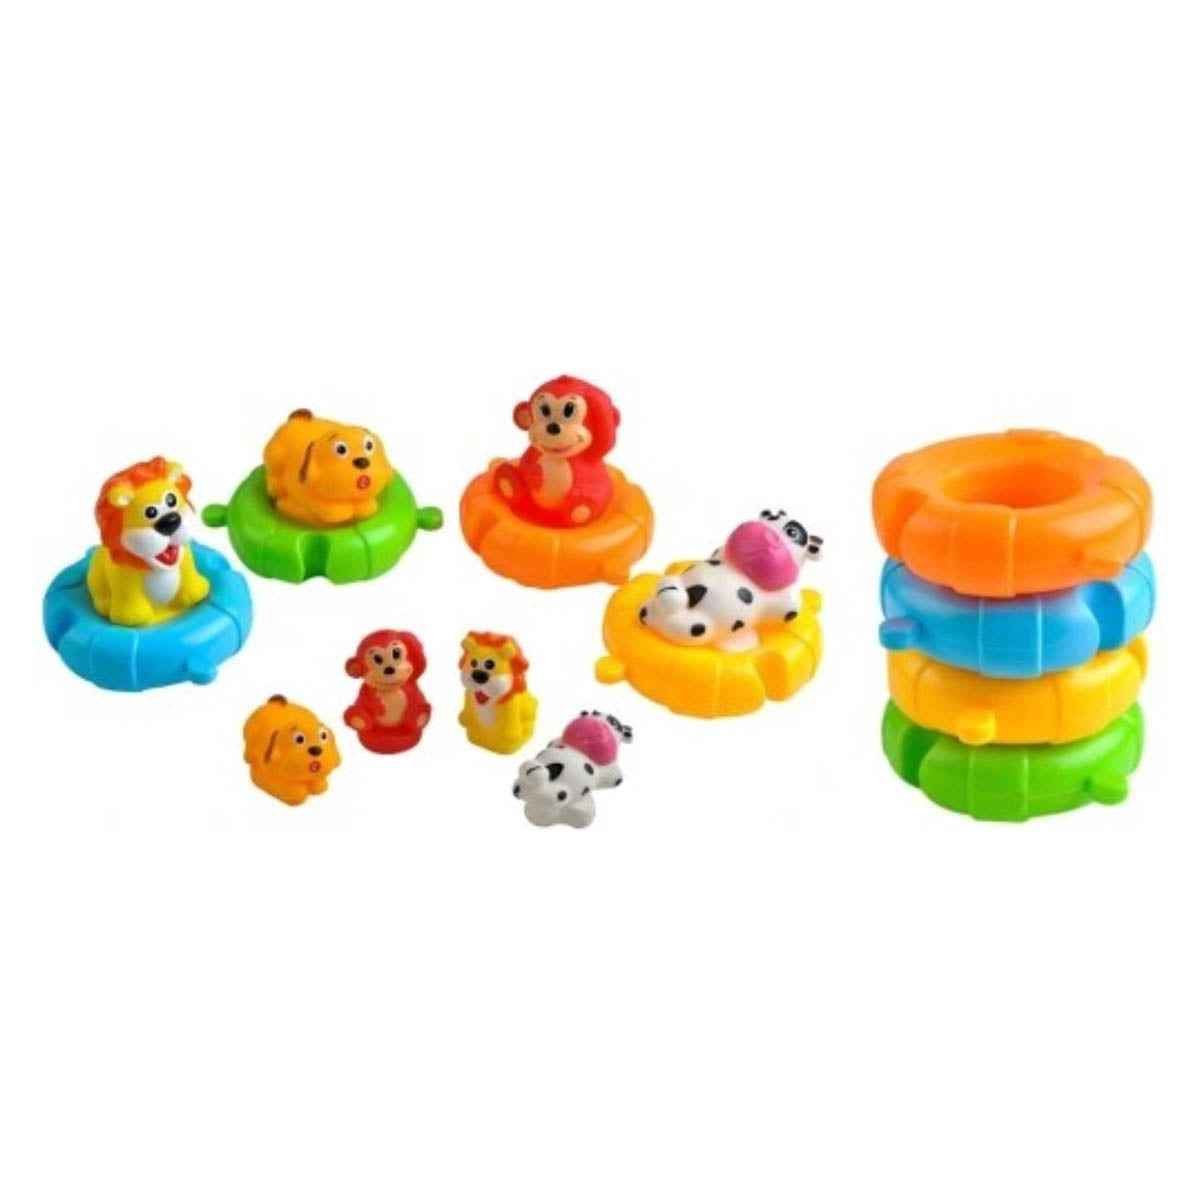 <tc>Ariko</tc> Bath toys, loose animals in life buoy - Rubber duck - lion - cow - monkey - dog